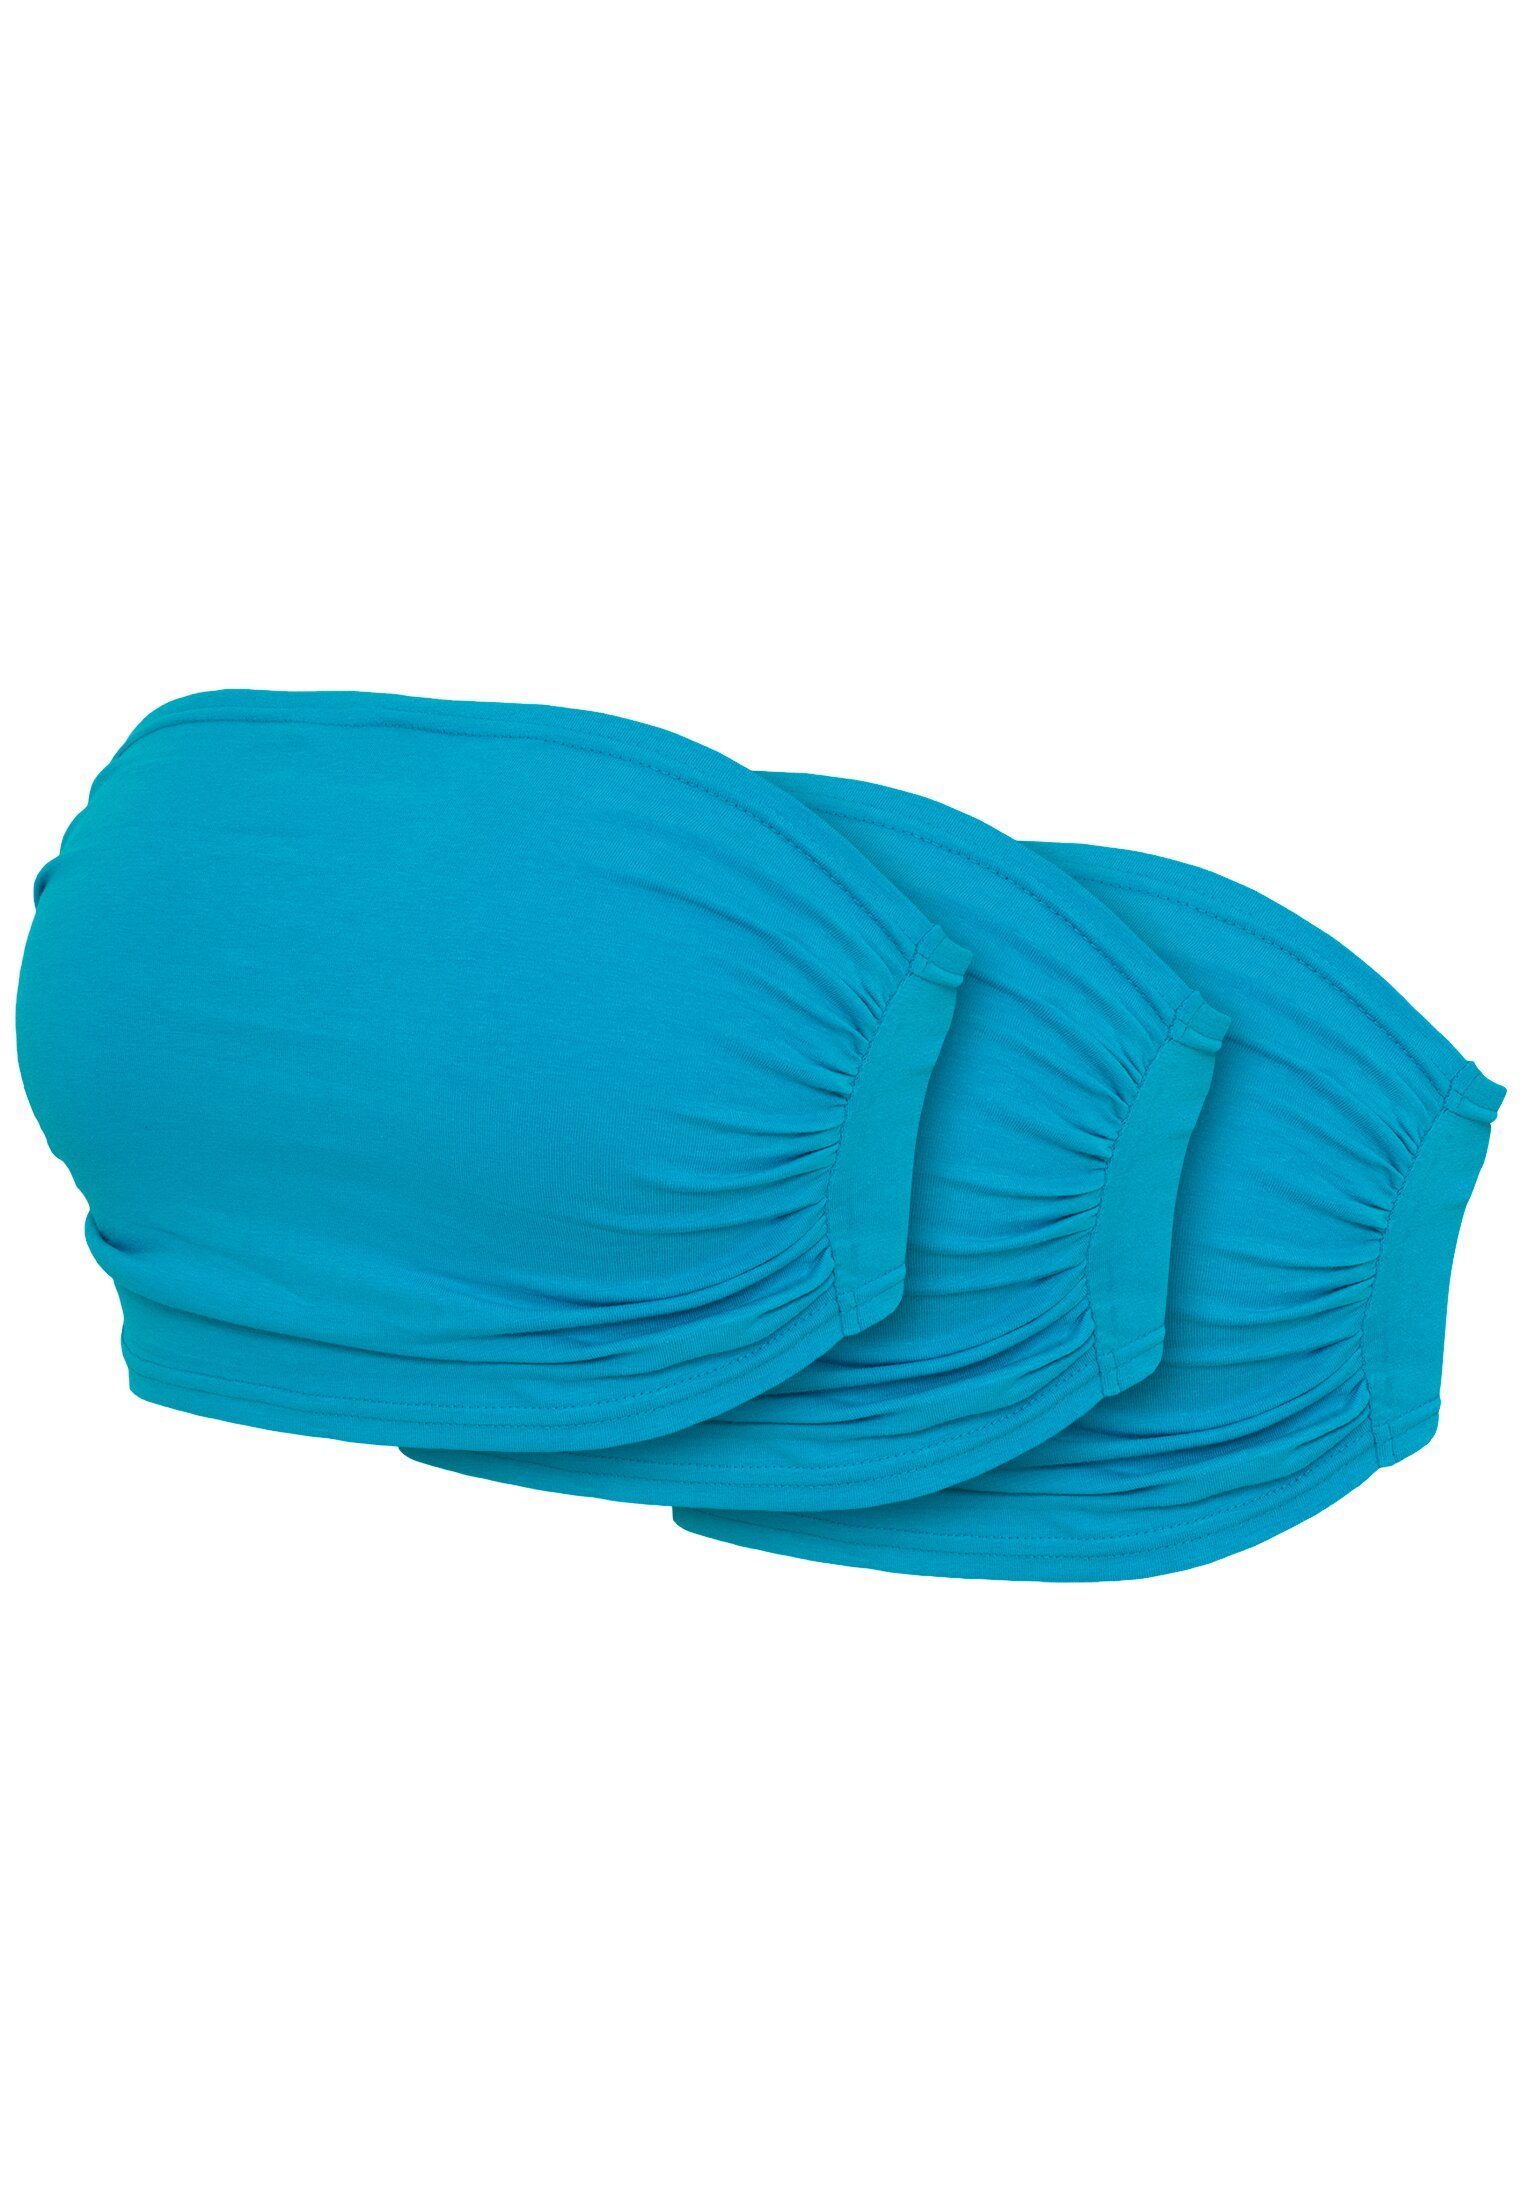 URBAN CLASSICS Bügelloser BH Damen Ladies Bandeau Top 3-Pack turquoise+turquoise+turquoise